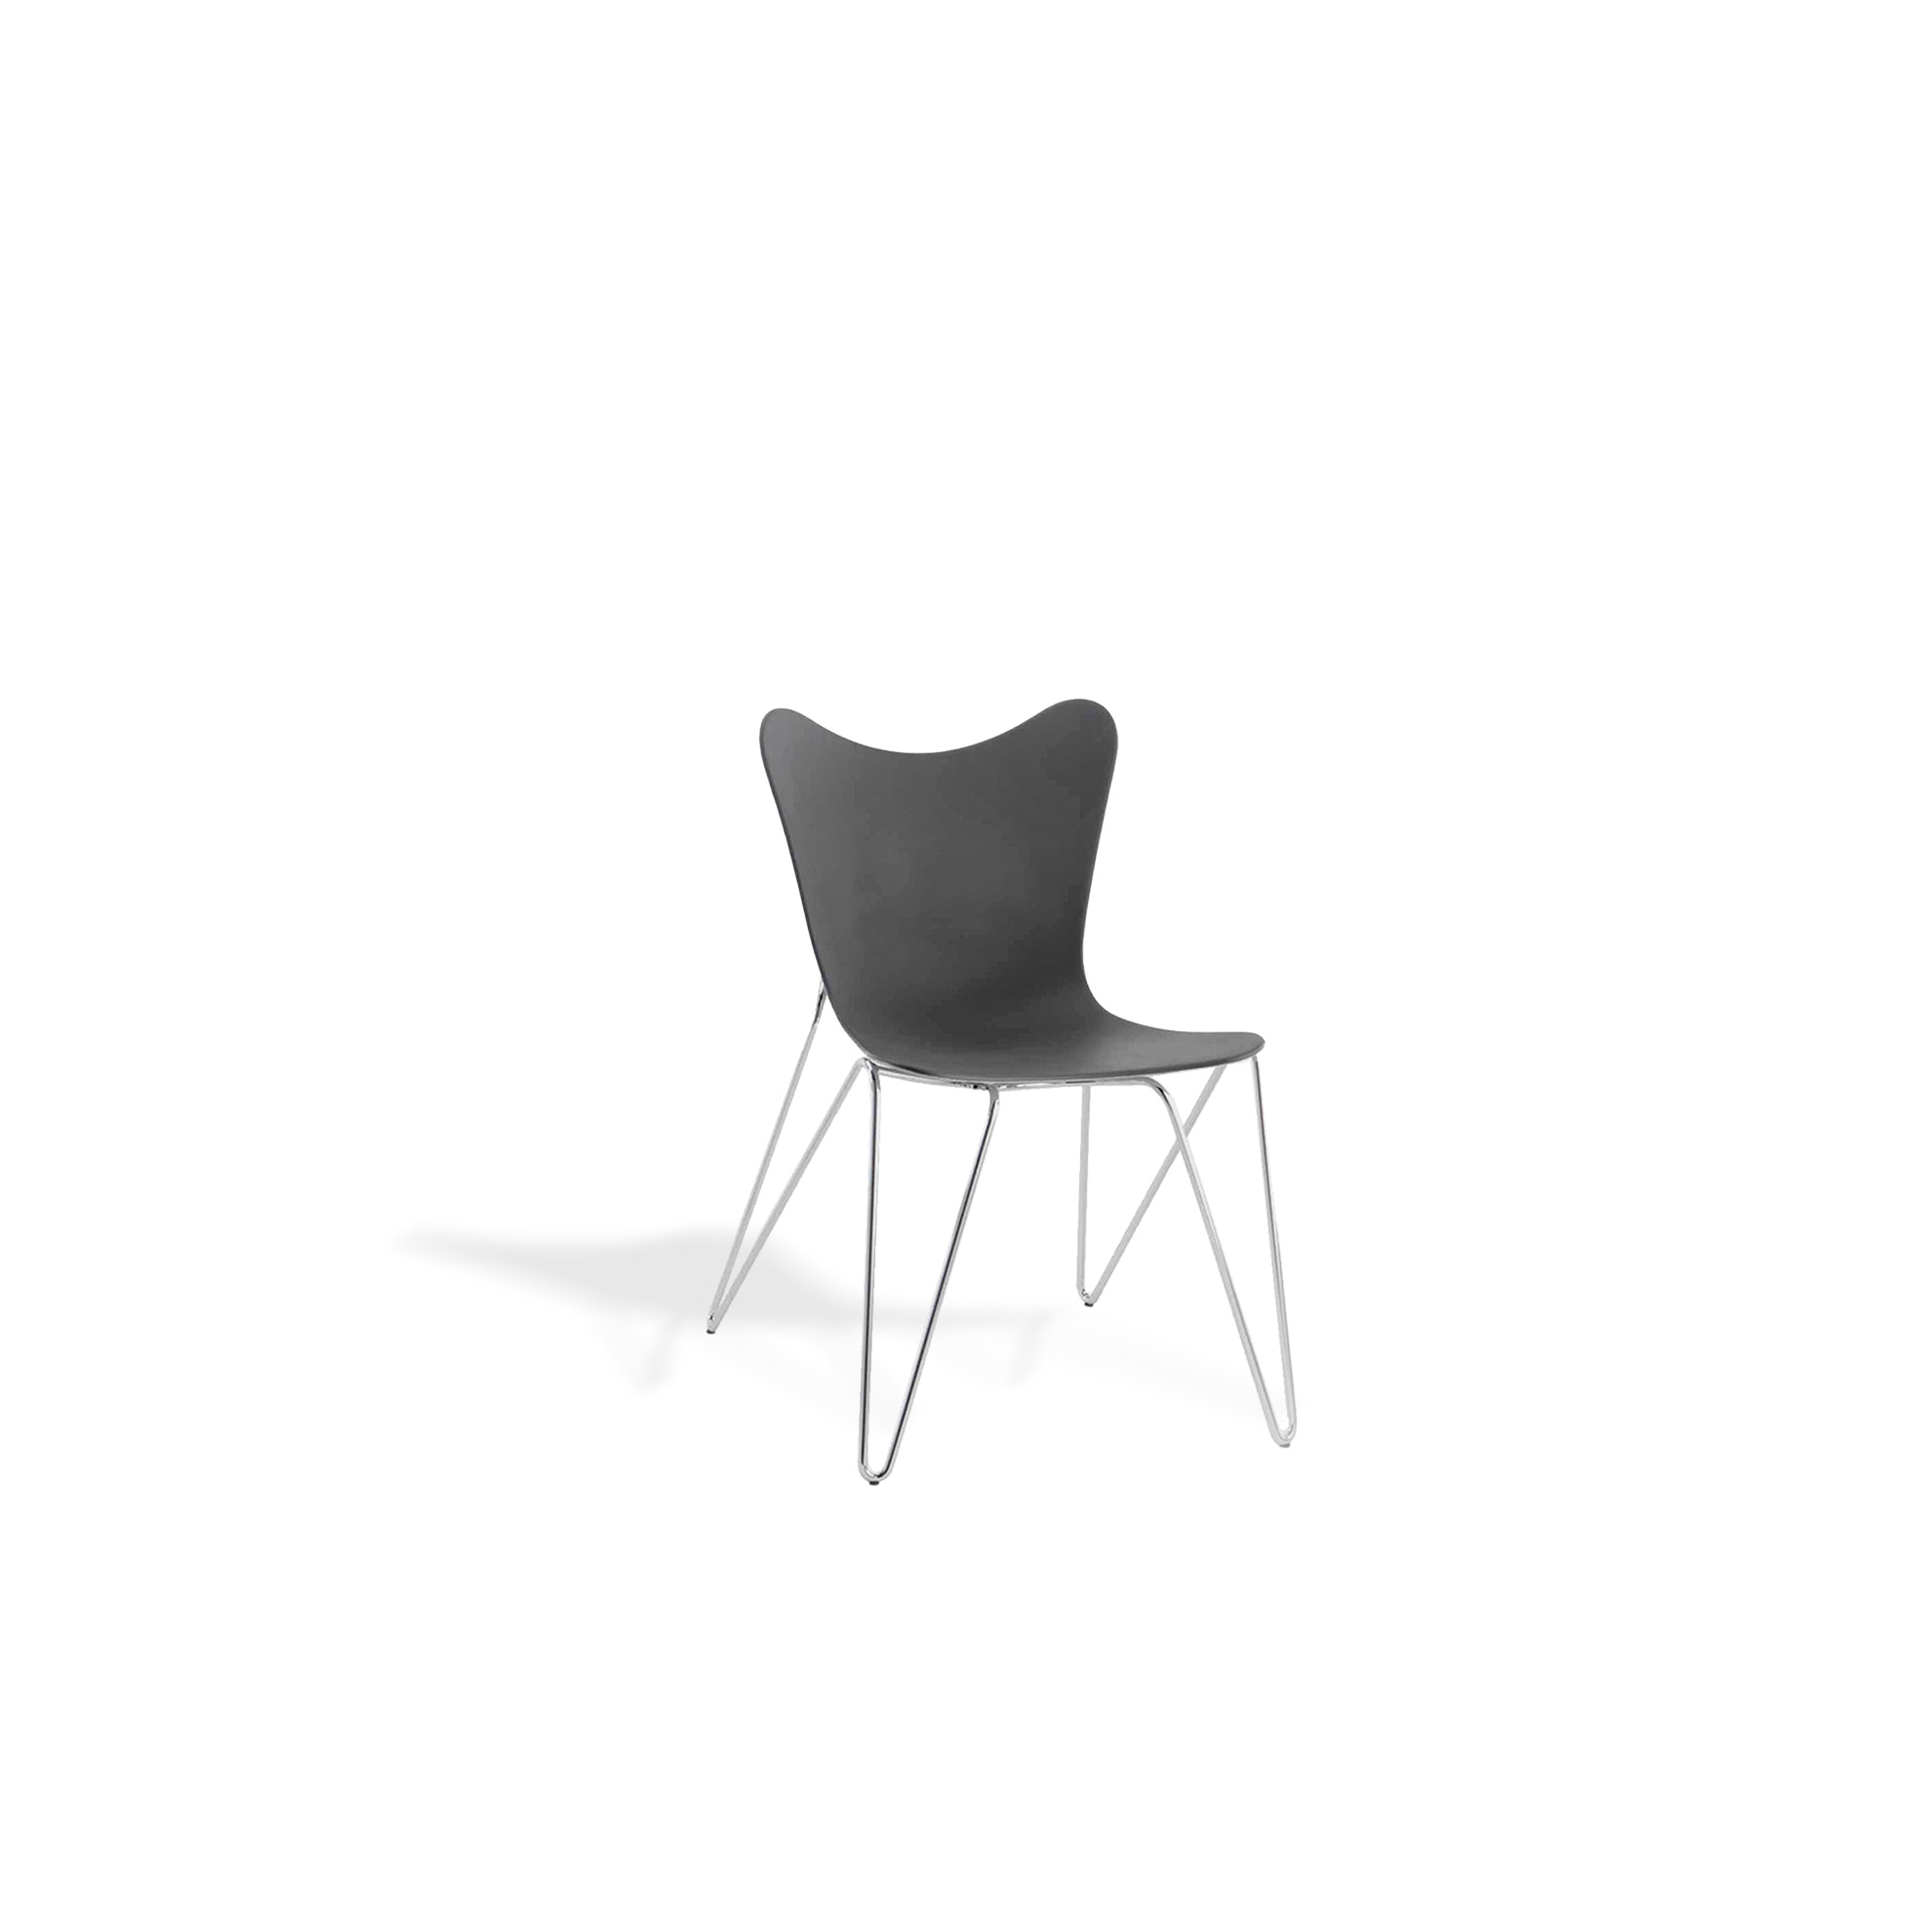 Trip Chair - Set of 4 by Casprini by Marcello Ziliani | Designer